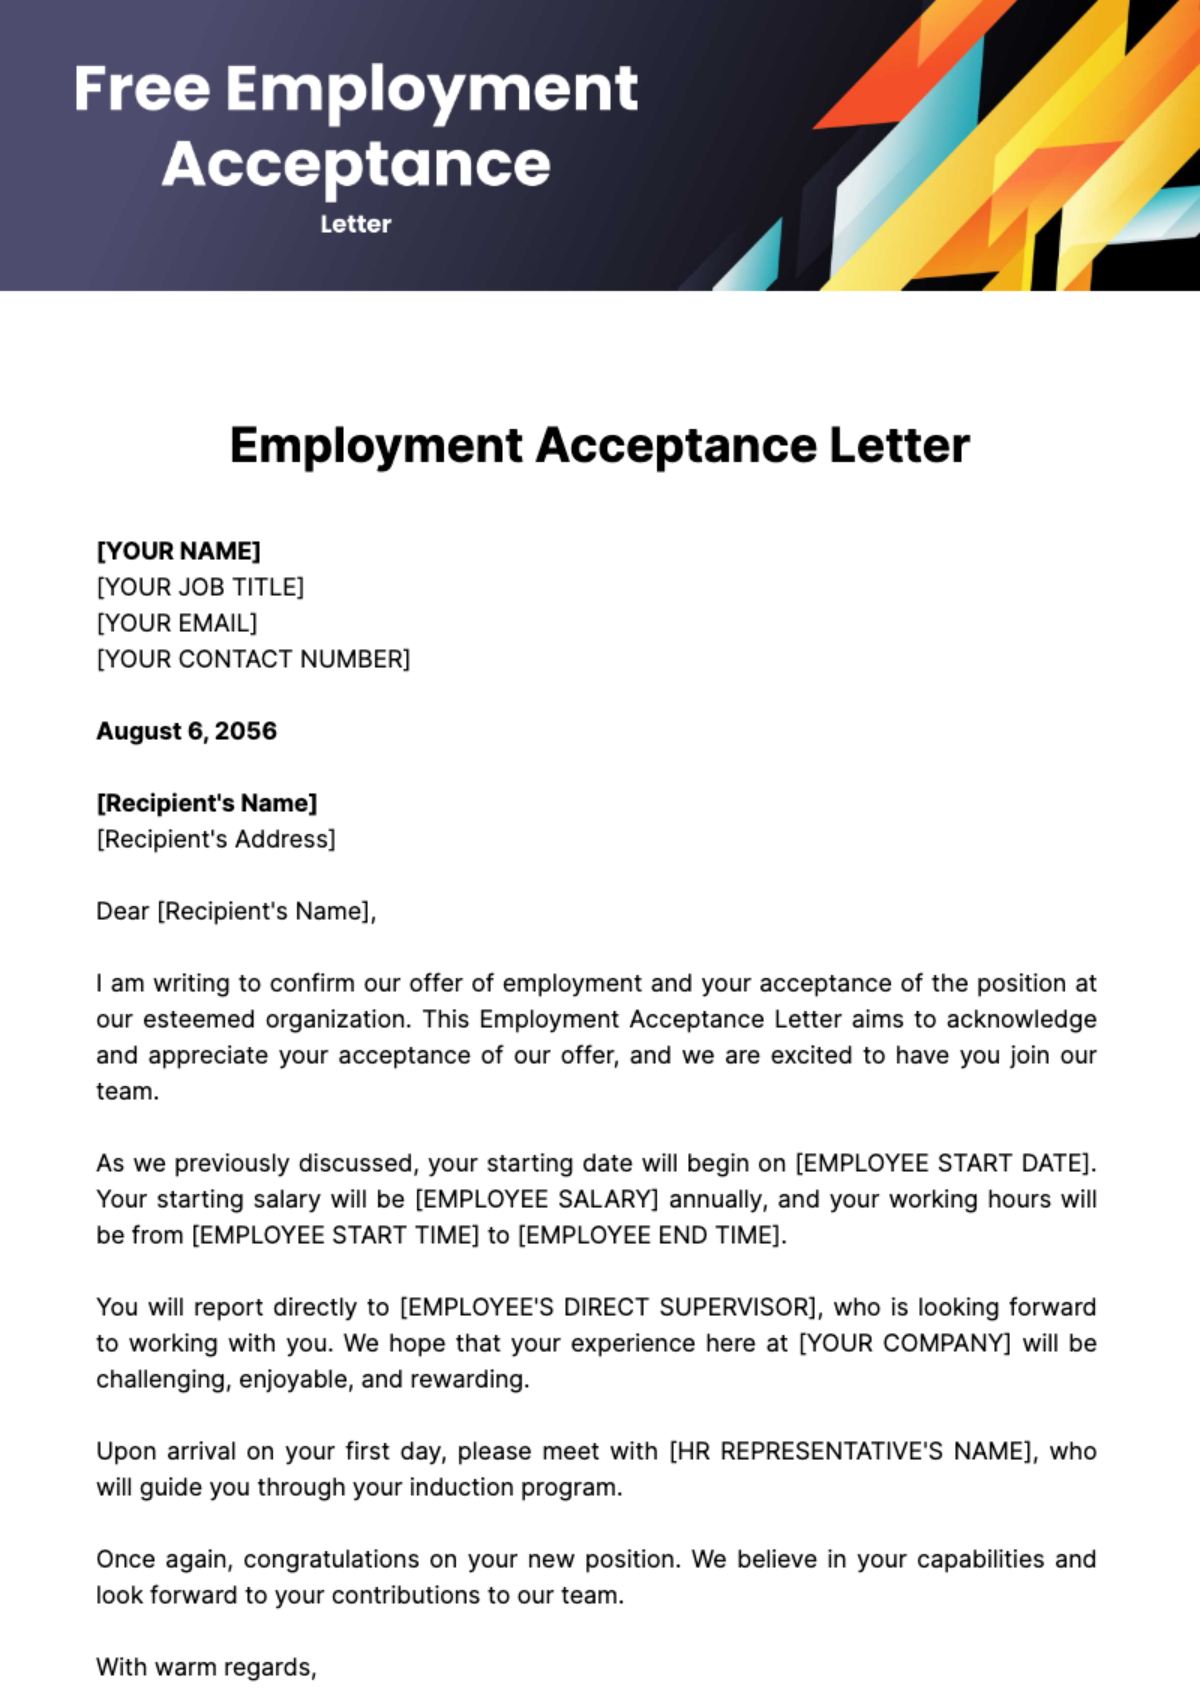 Employment Acceptance Letter Template